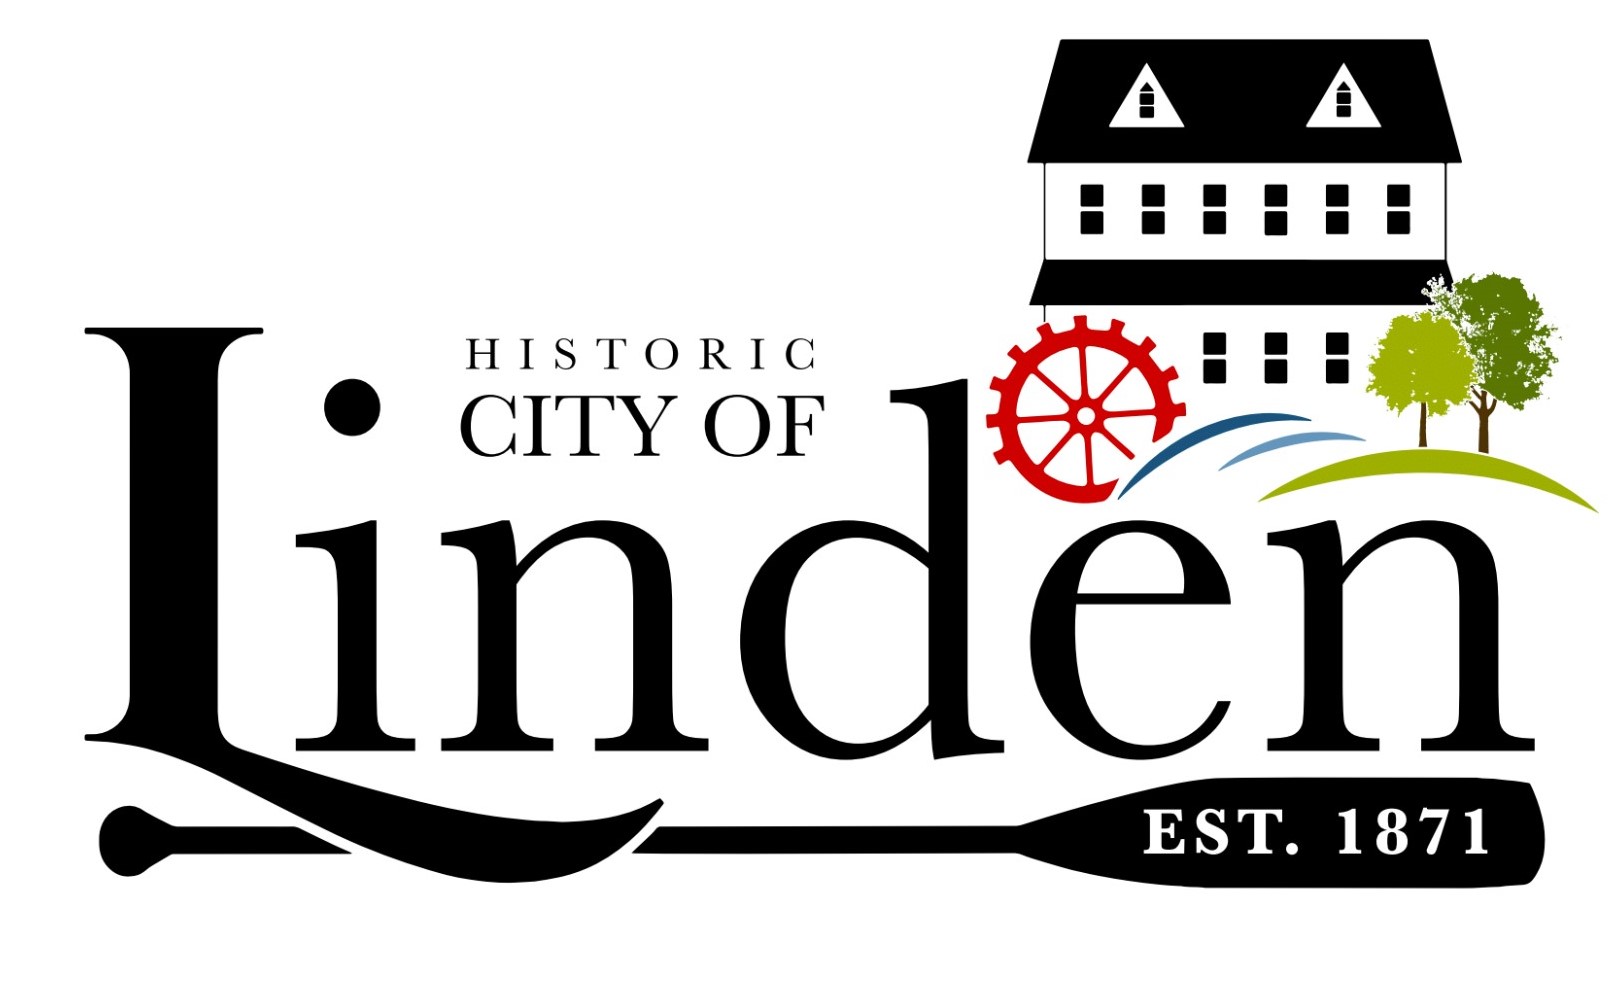 Organization logo of City of Linden